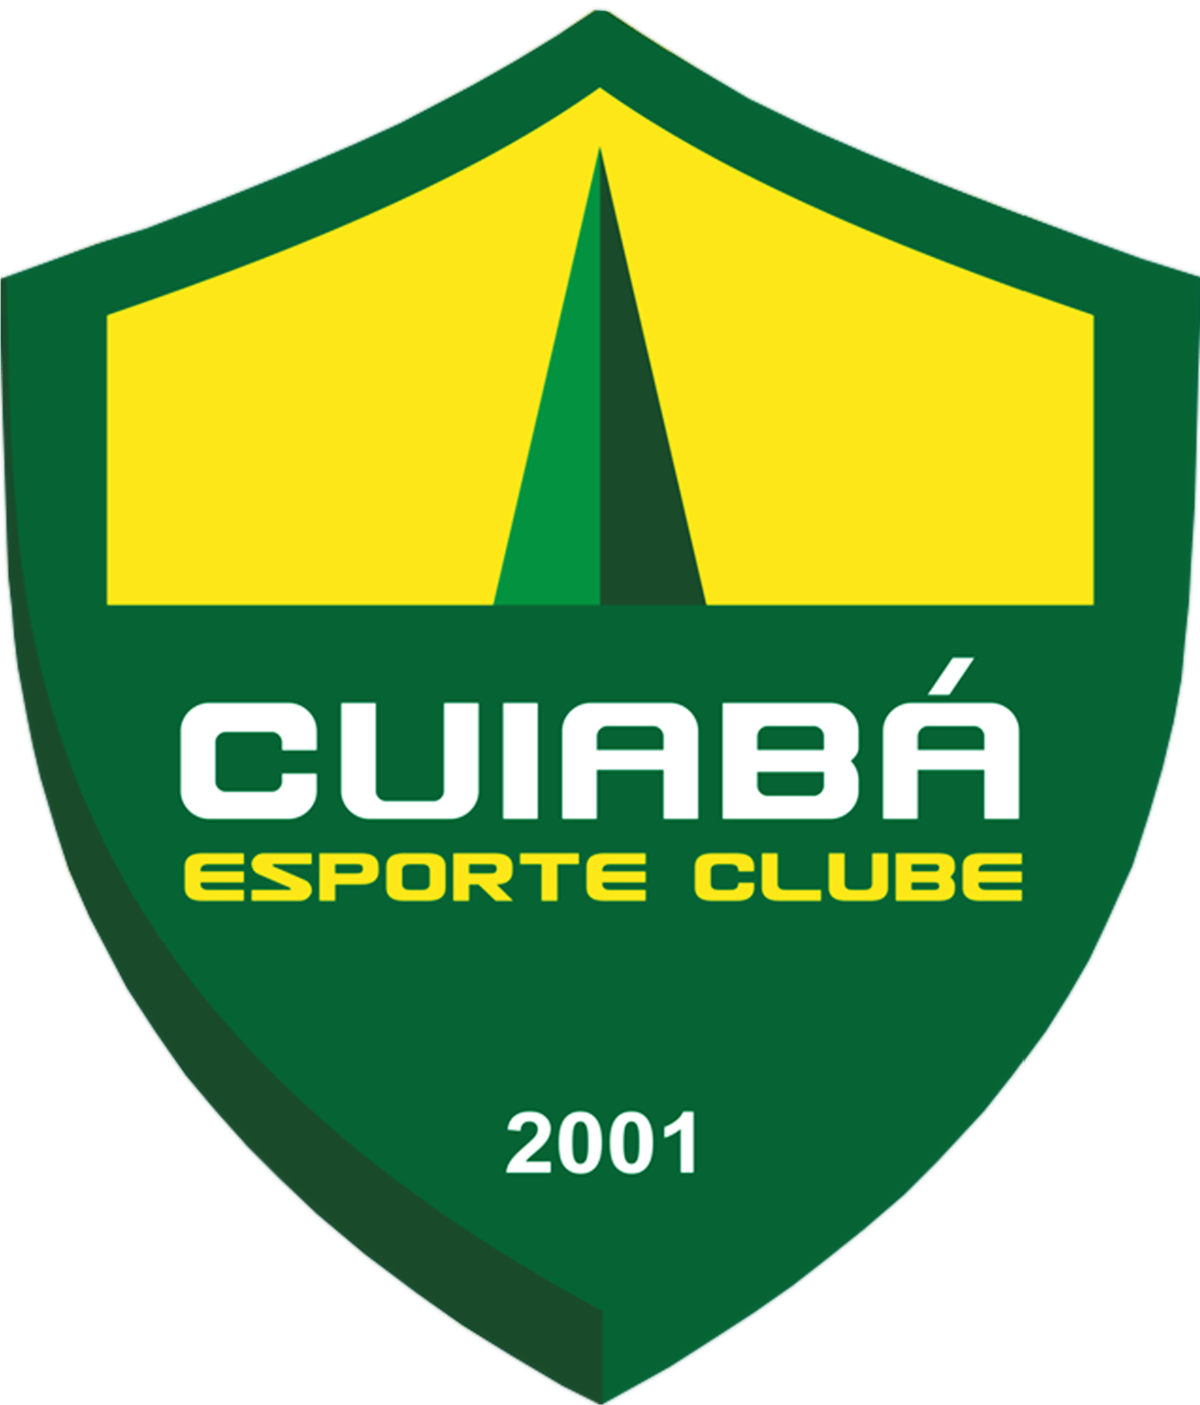 Avai FC vs Cuiaba Prediction: Home Fixture for Avai FC 